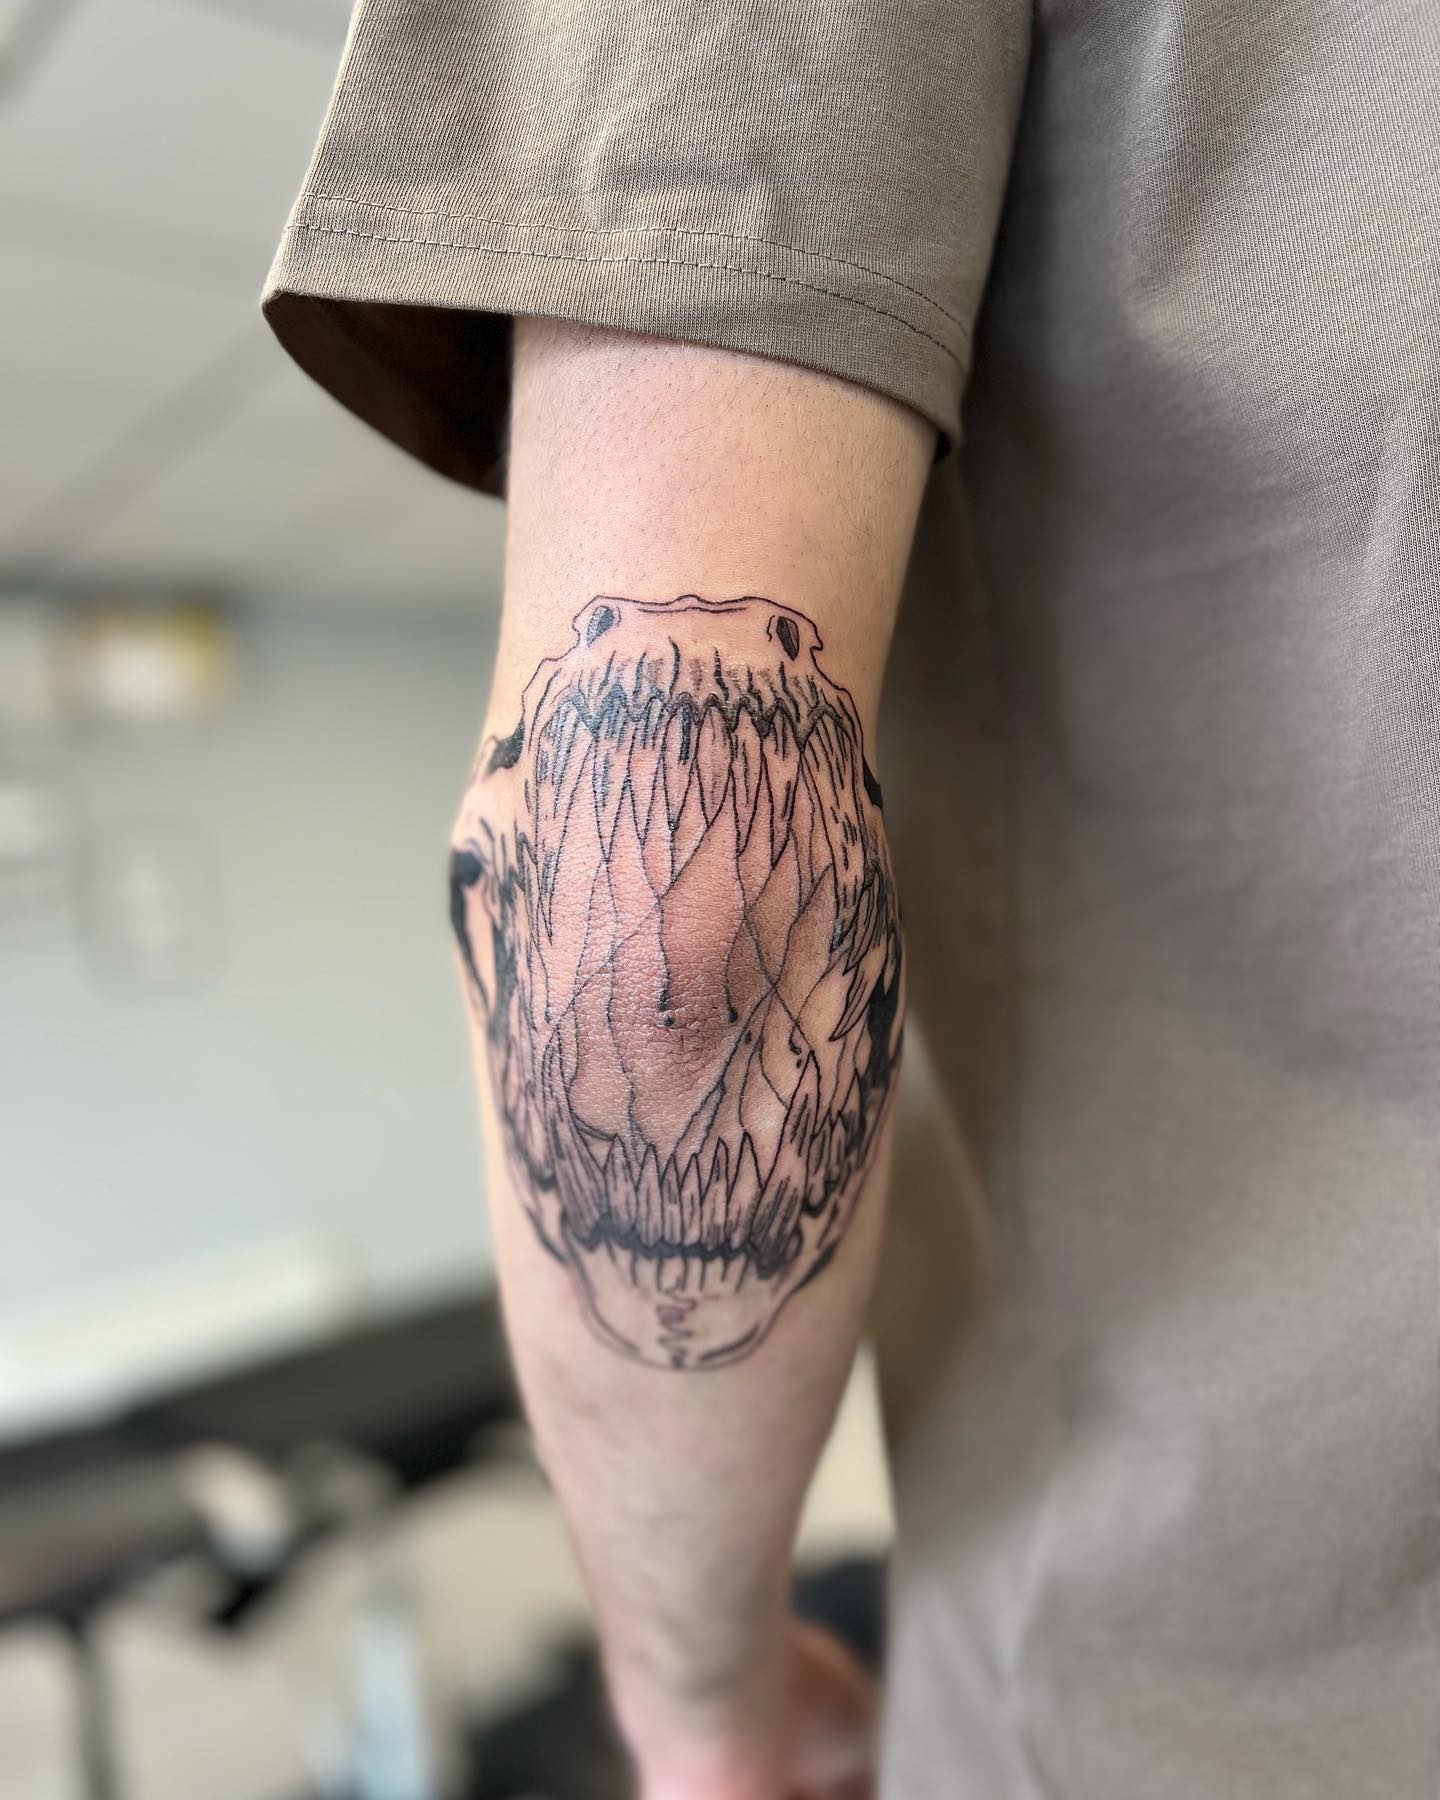 elbow tattoo ideas – All Things Tattoo